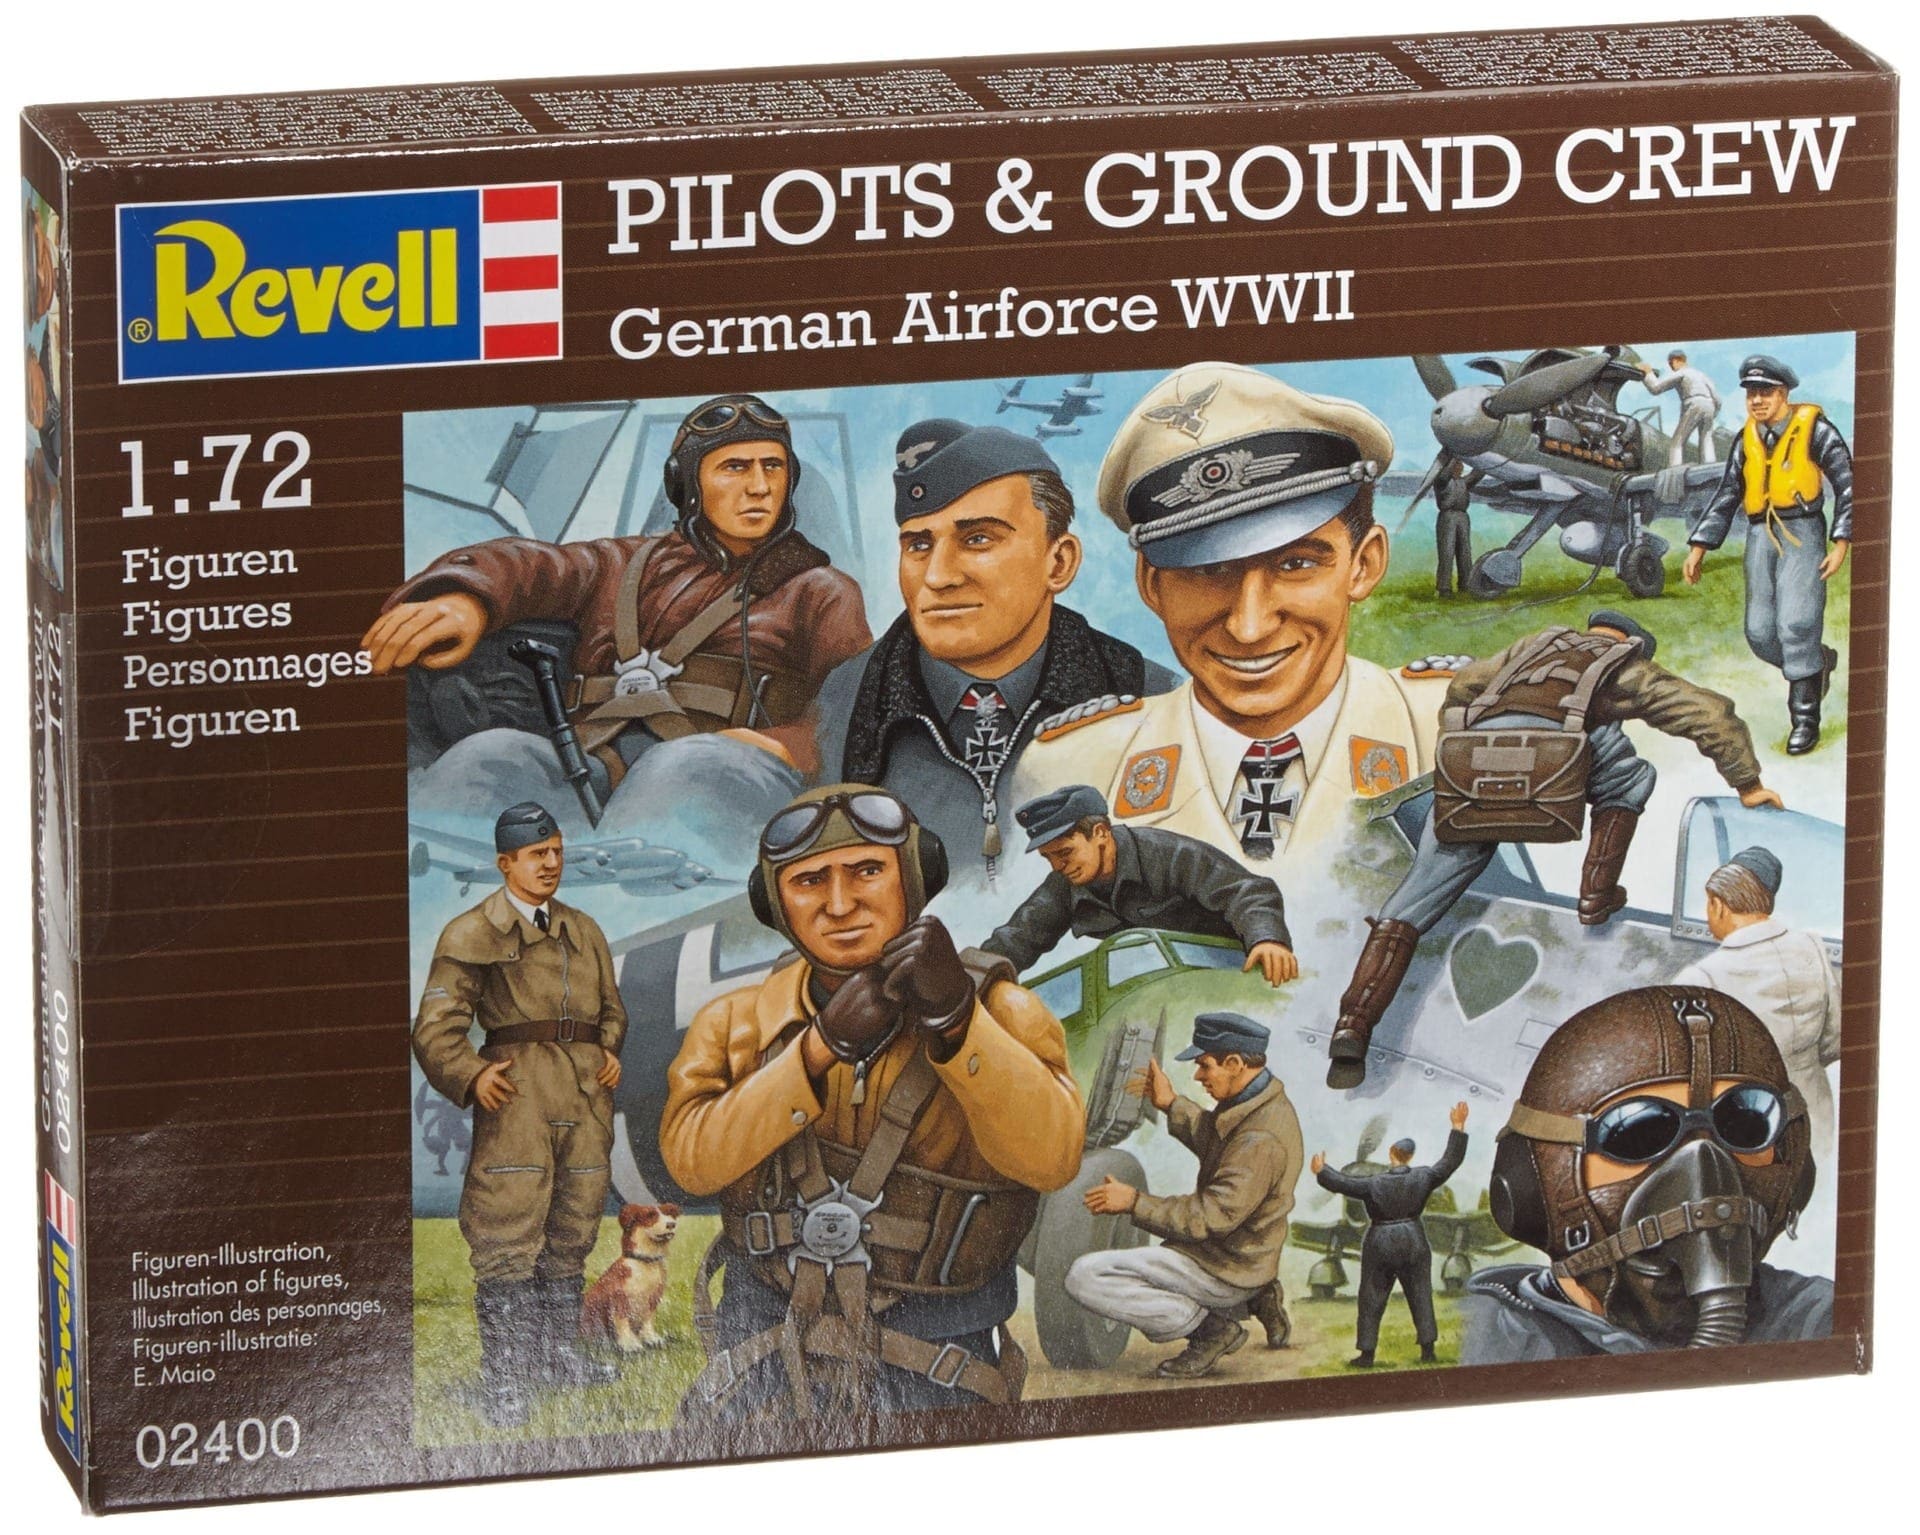 Graeme revell 5. Фигурка летчика 1/72. Revell немецкие солдаты. Revell "пилоты и наземная команда британских ВВС". Фигуры пилотов 1/72.